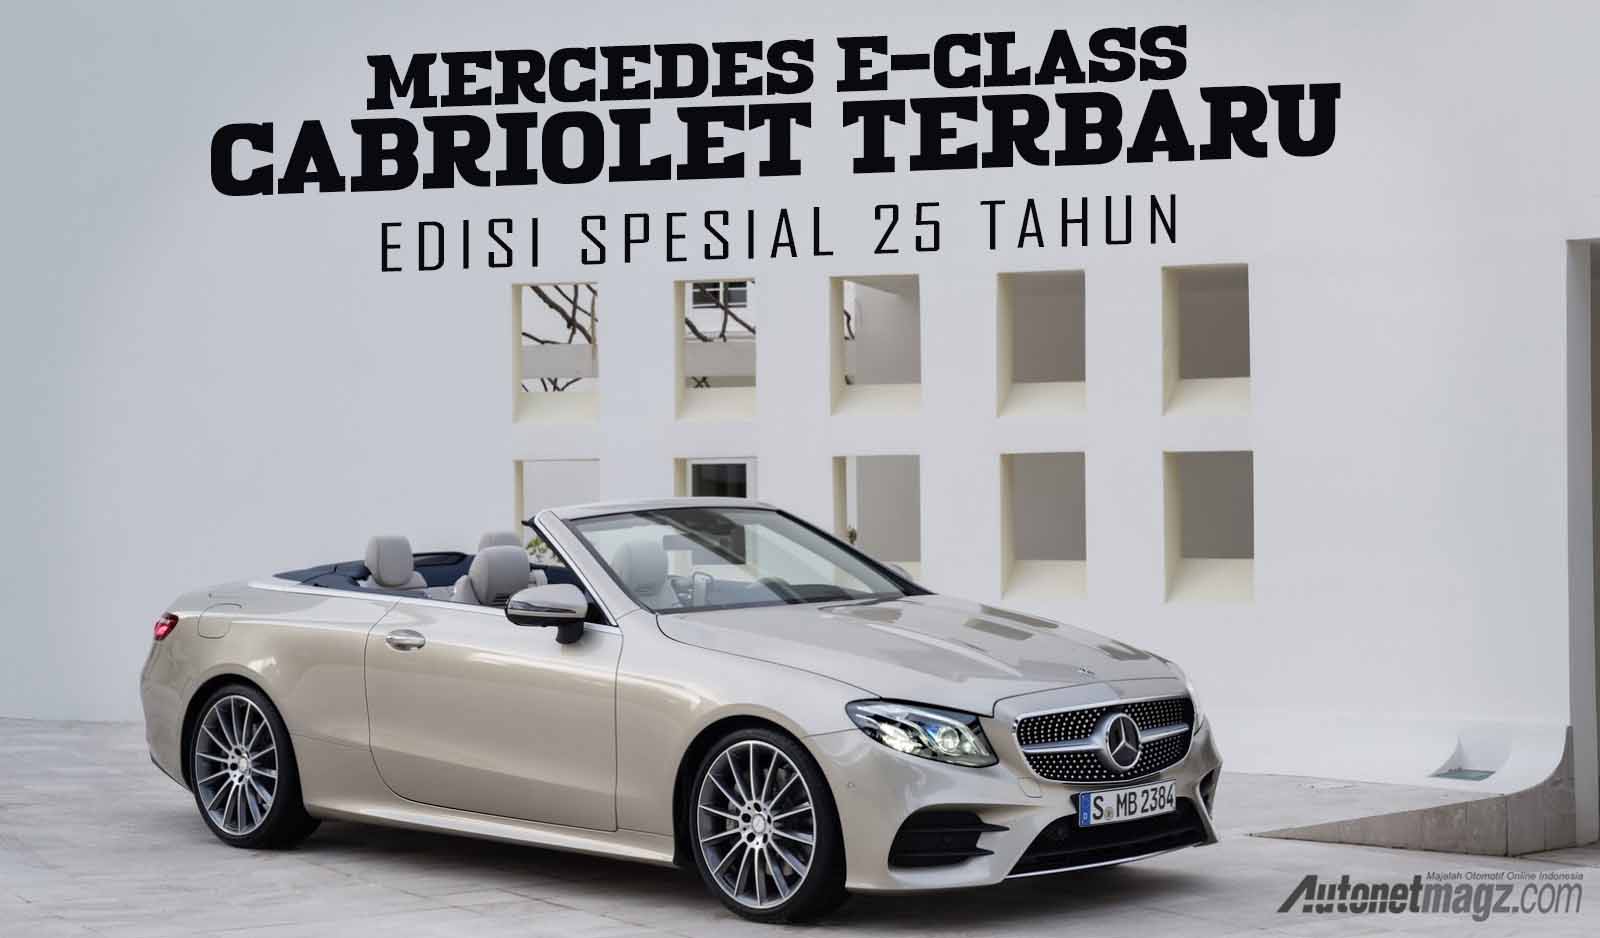 Berita, Cover Mercedes Benz E Class Cabriolet: Mercedes E-Class Cabriolet Terbaru Dirilis di Jerman, Edisi Spesial 25 Tahun